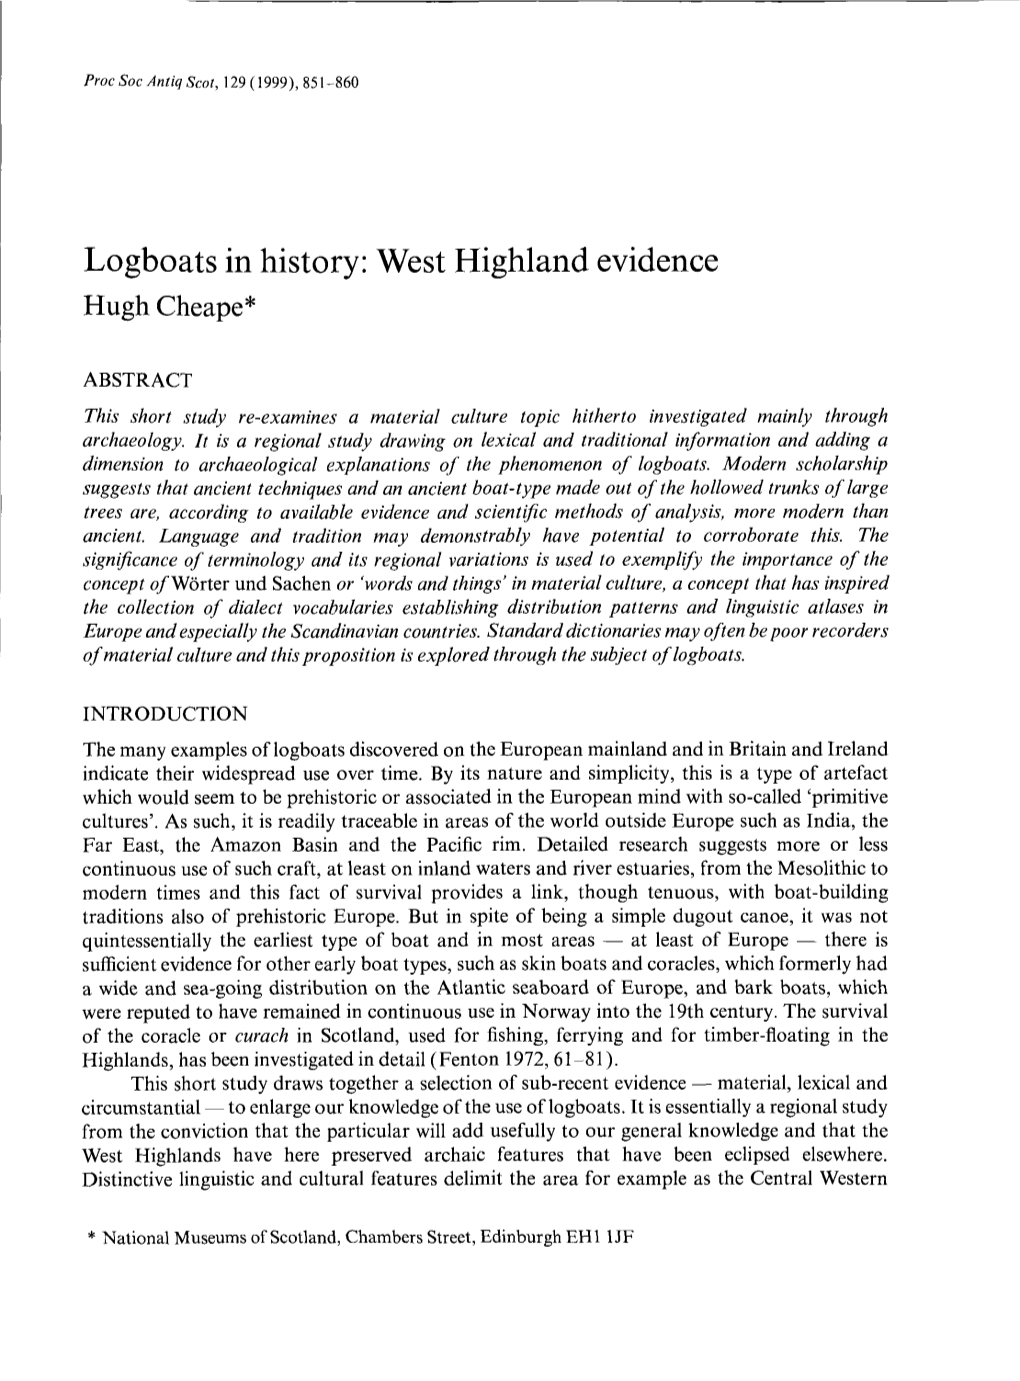 Logboats in History: West Highland Evidence Hugh Cheape*